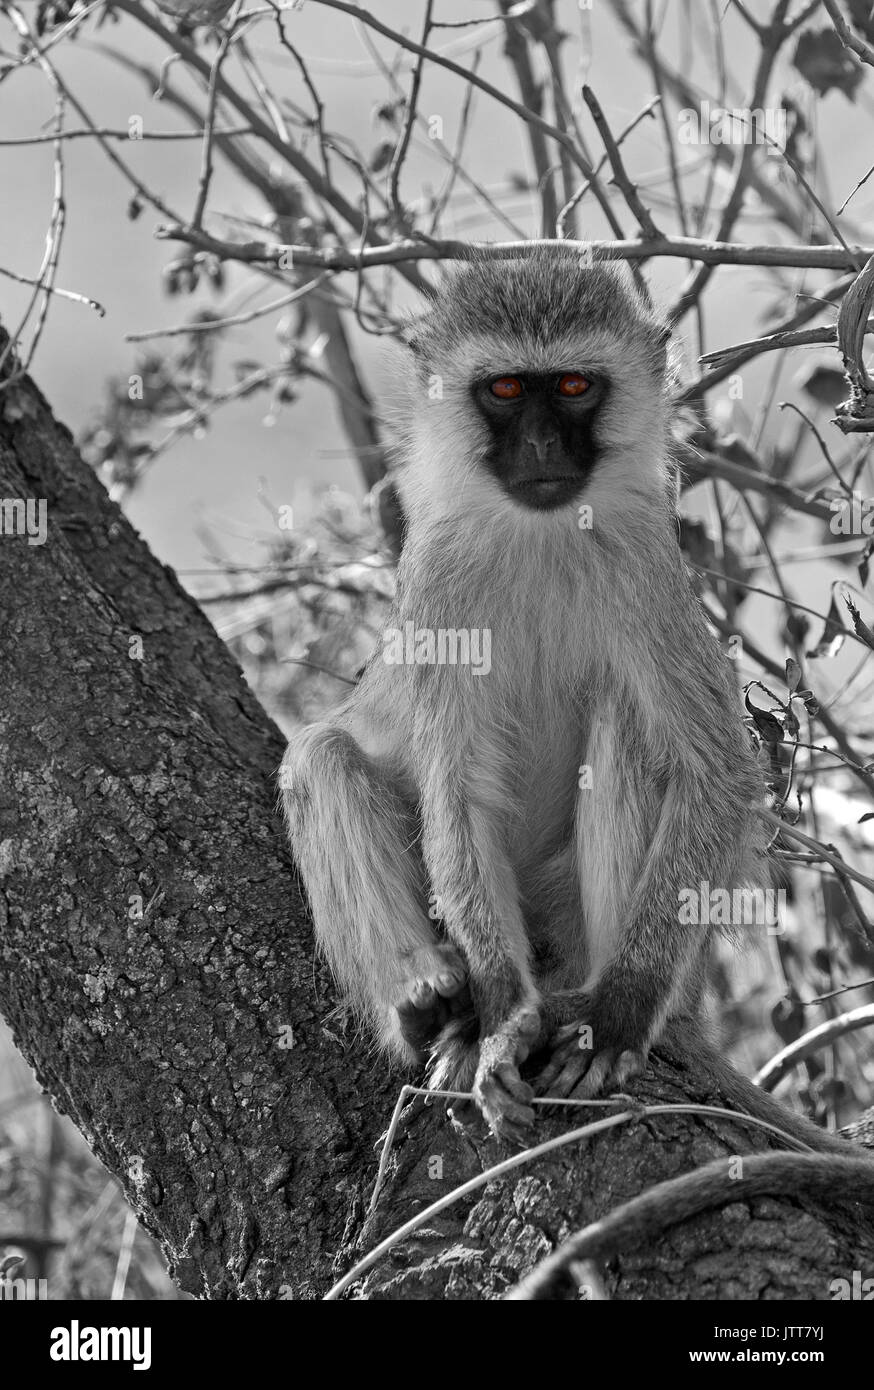 Black and white vervet monkey on a branch Stock Photo